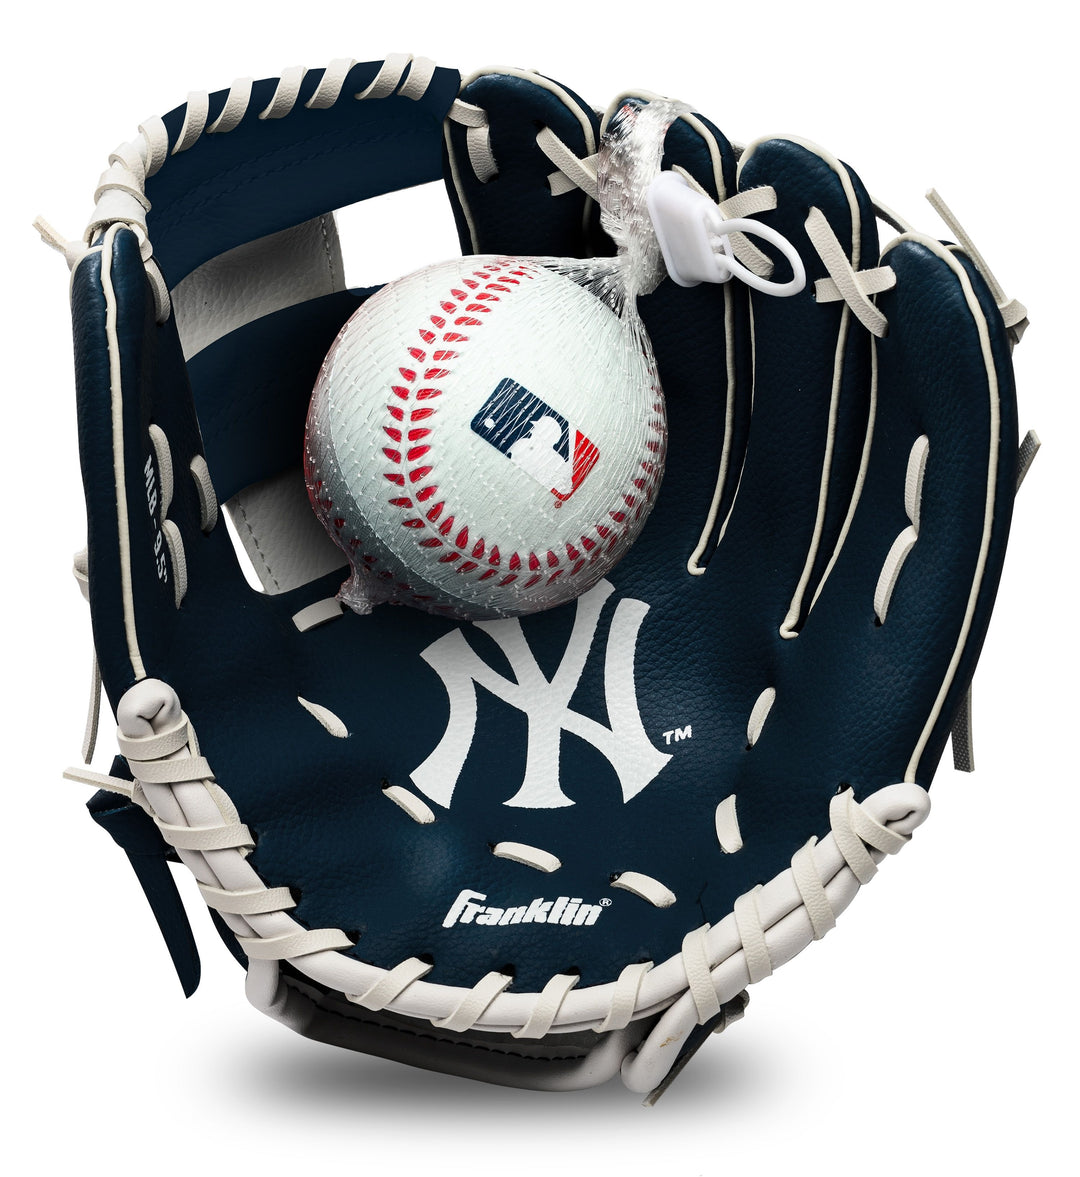 NY Yankees Team Glove And Ball